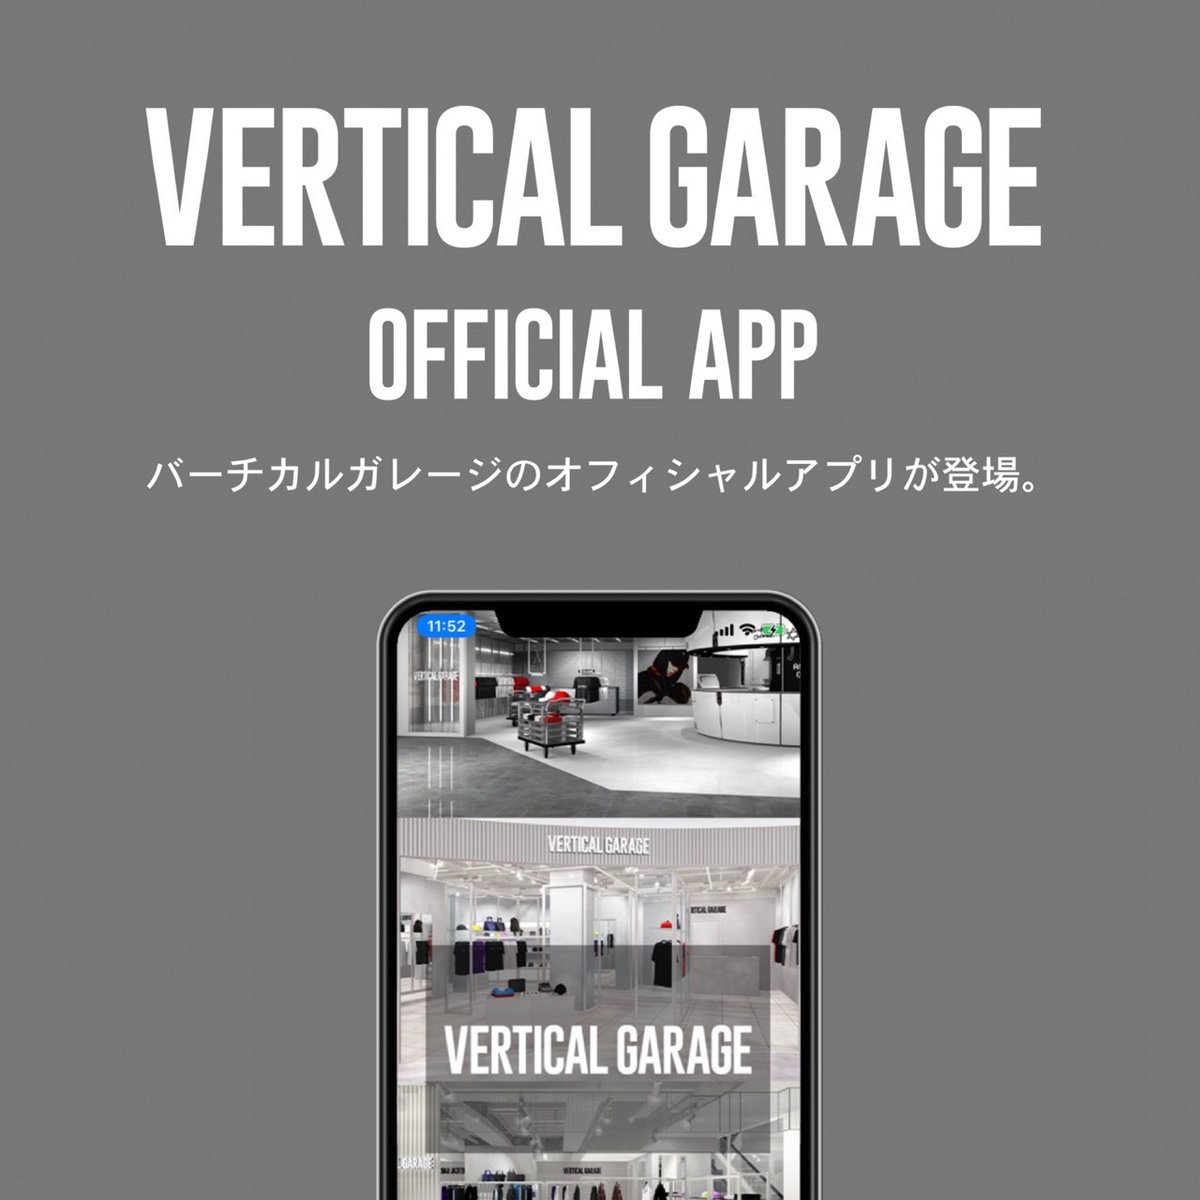 O Xrhsths J S B Official Sto Twitter Vertical Garage Application お買い物がお得になるポイント機能付きvertical Garage公式アプリがリリースされました ダウンロードしていただくとアプリ限定のオリジナル壁紙 オリジナルフォトフレームをプレゼント